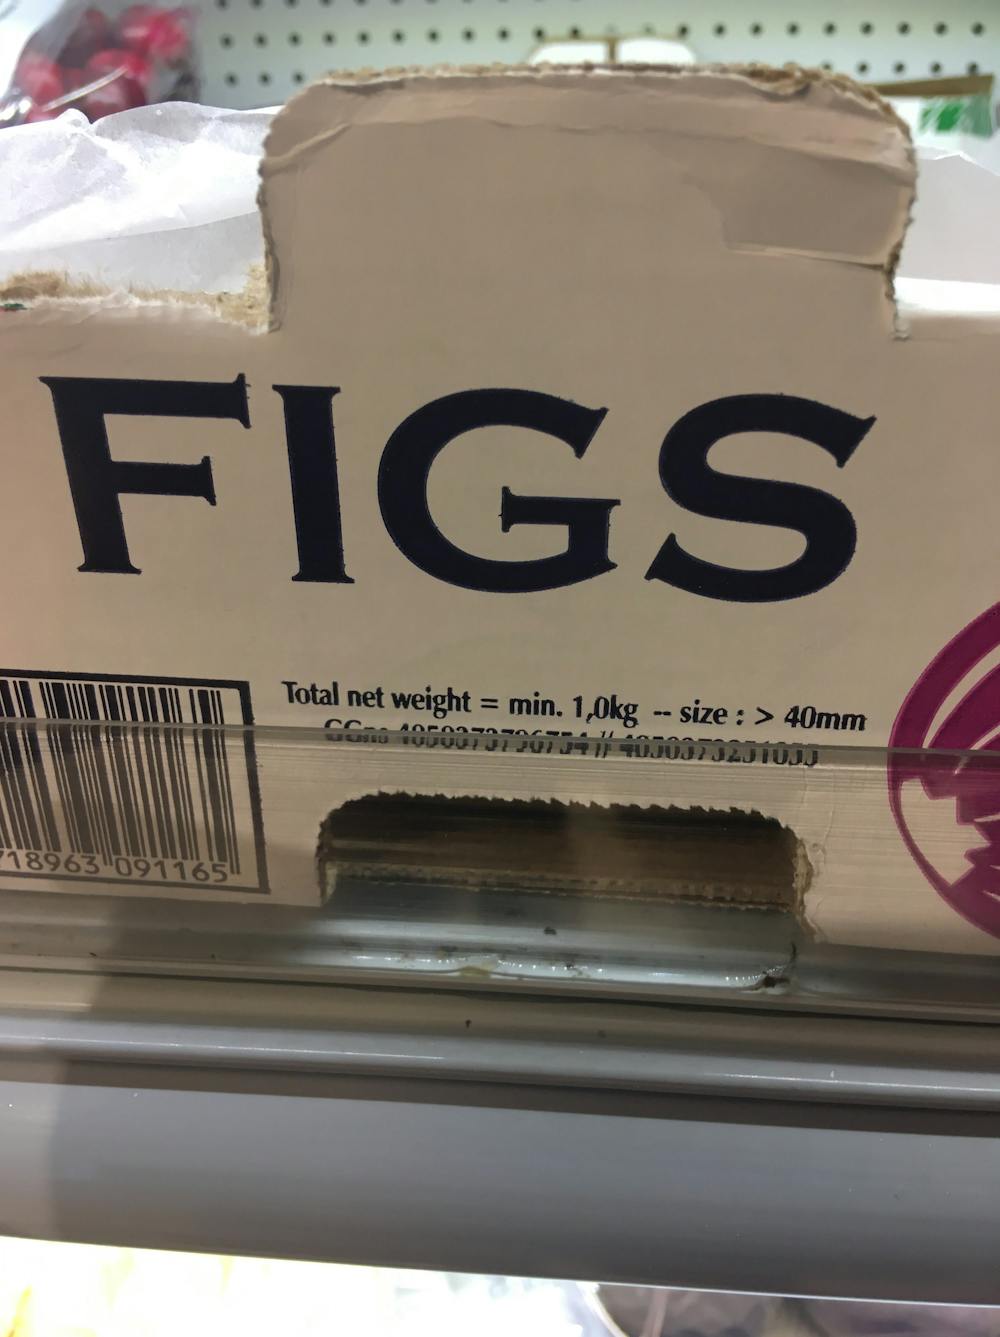 Ingrediensliste - Figs